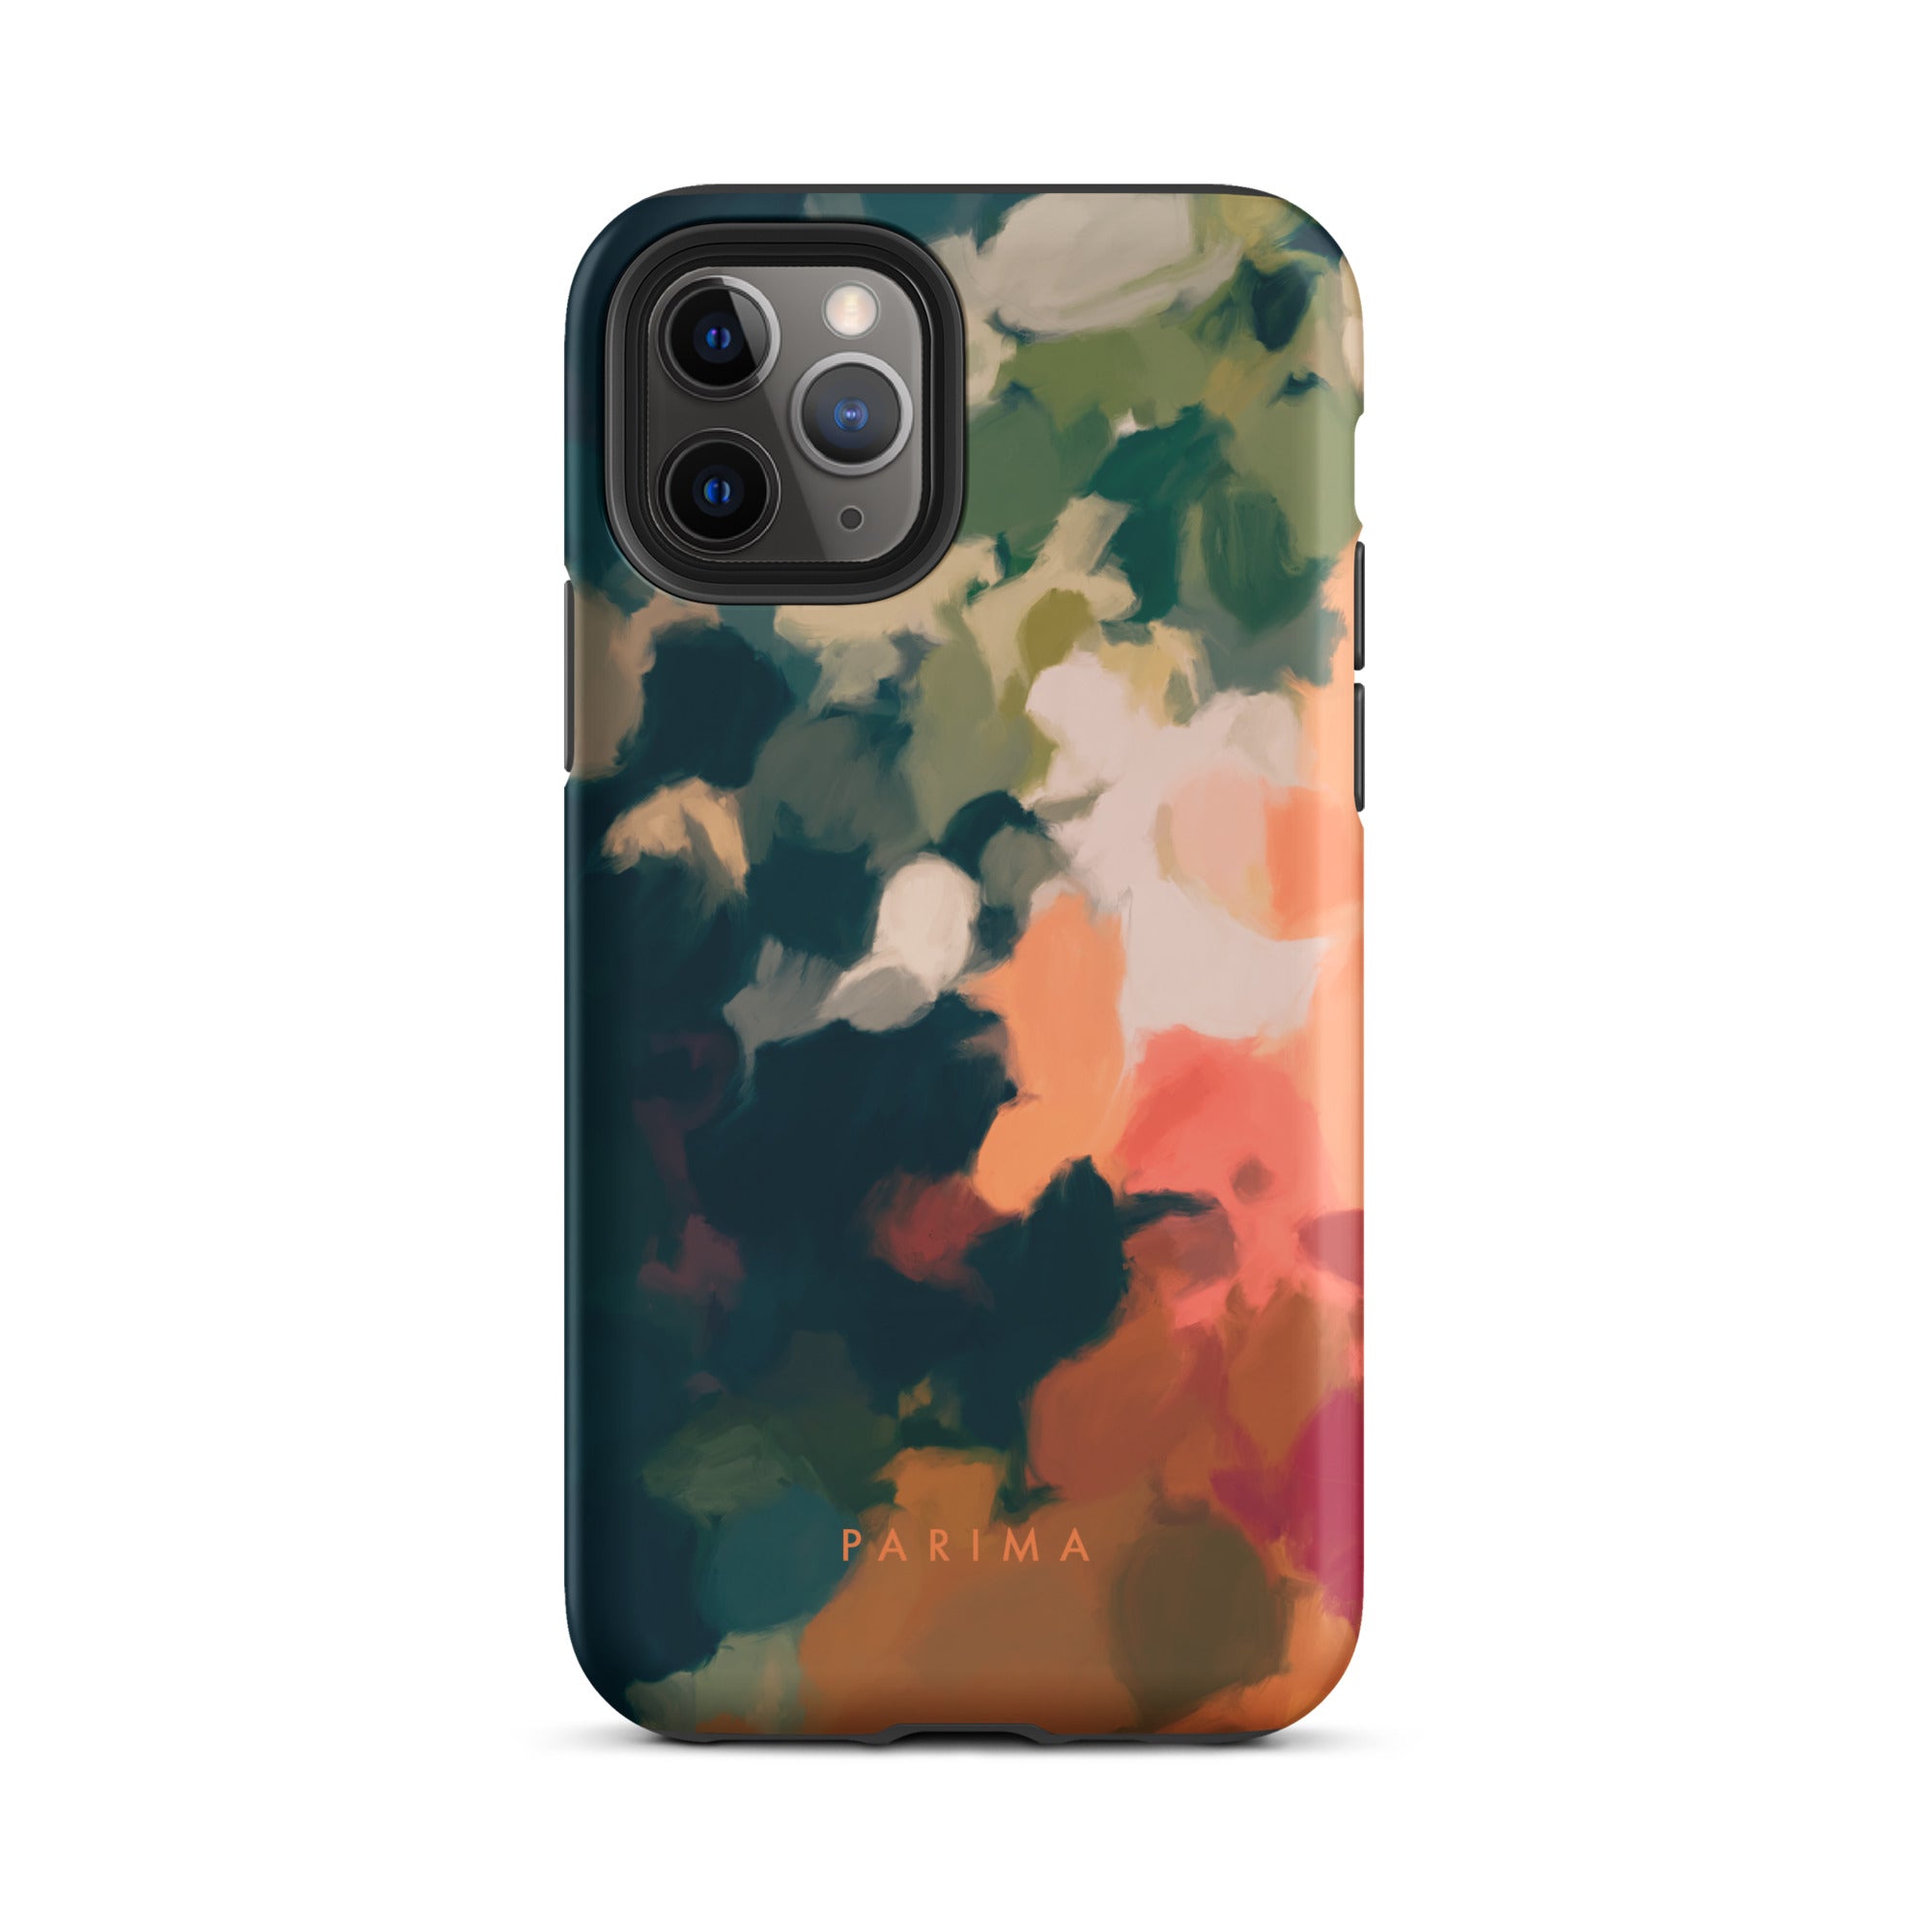 Ria, blue and orange abstract art - iPhone 11 Pro tough case by Parima Studio